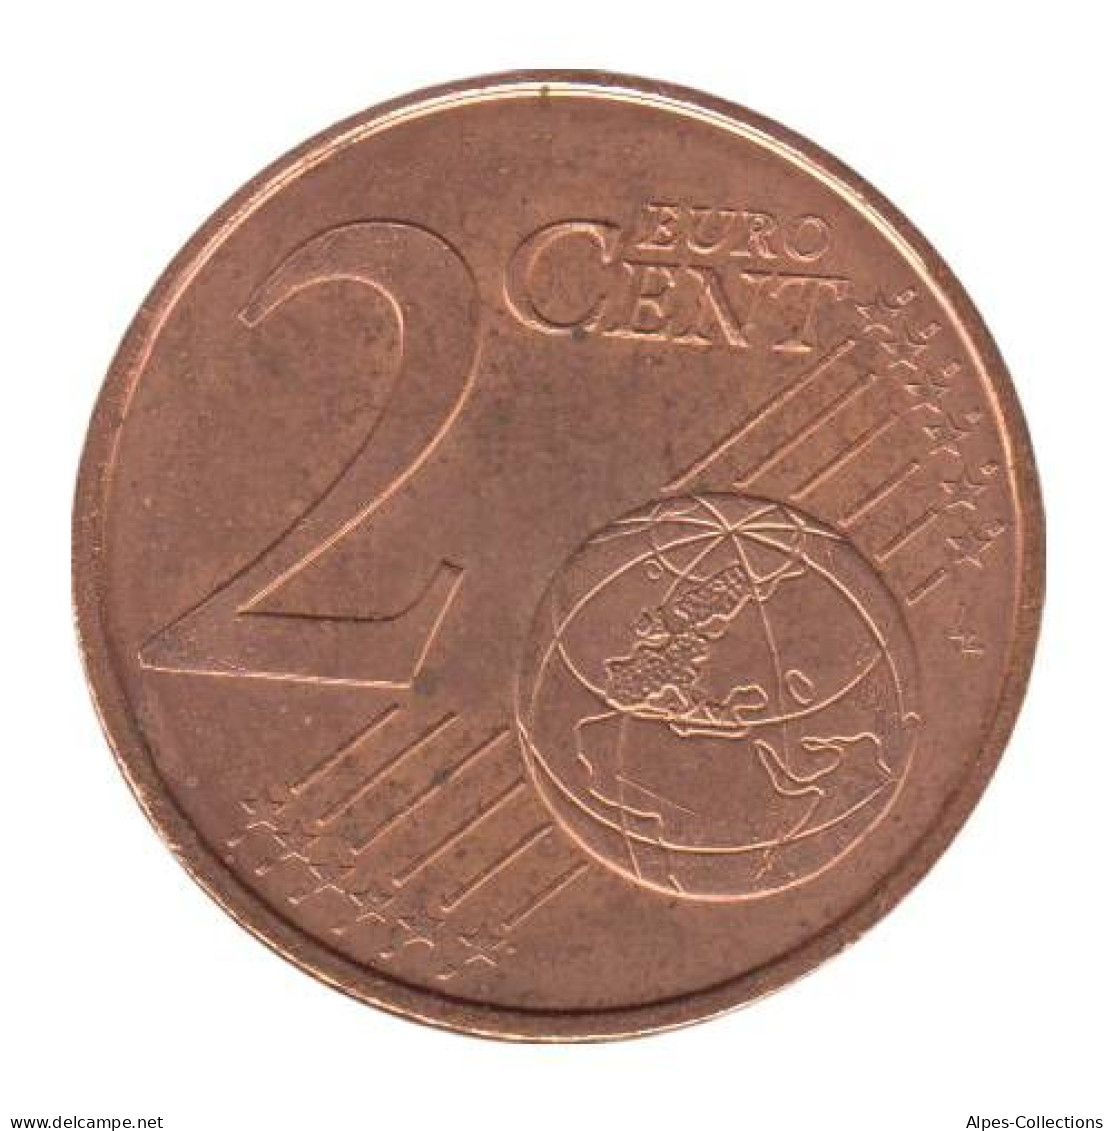 FR00204.1 - FRANCE - 2 Cents - 2004 - Frankreich